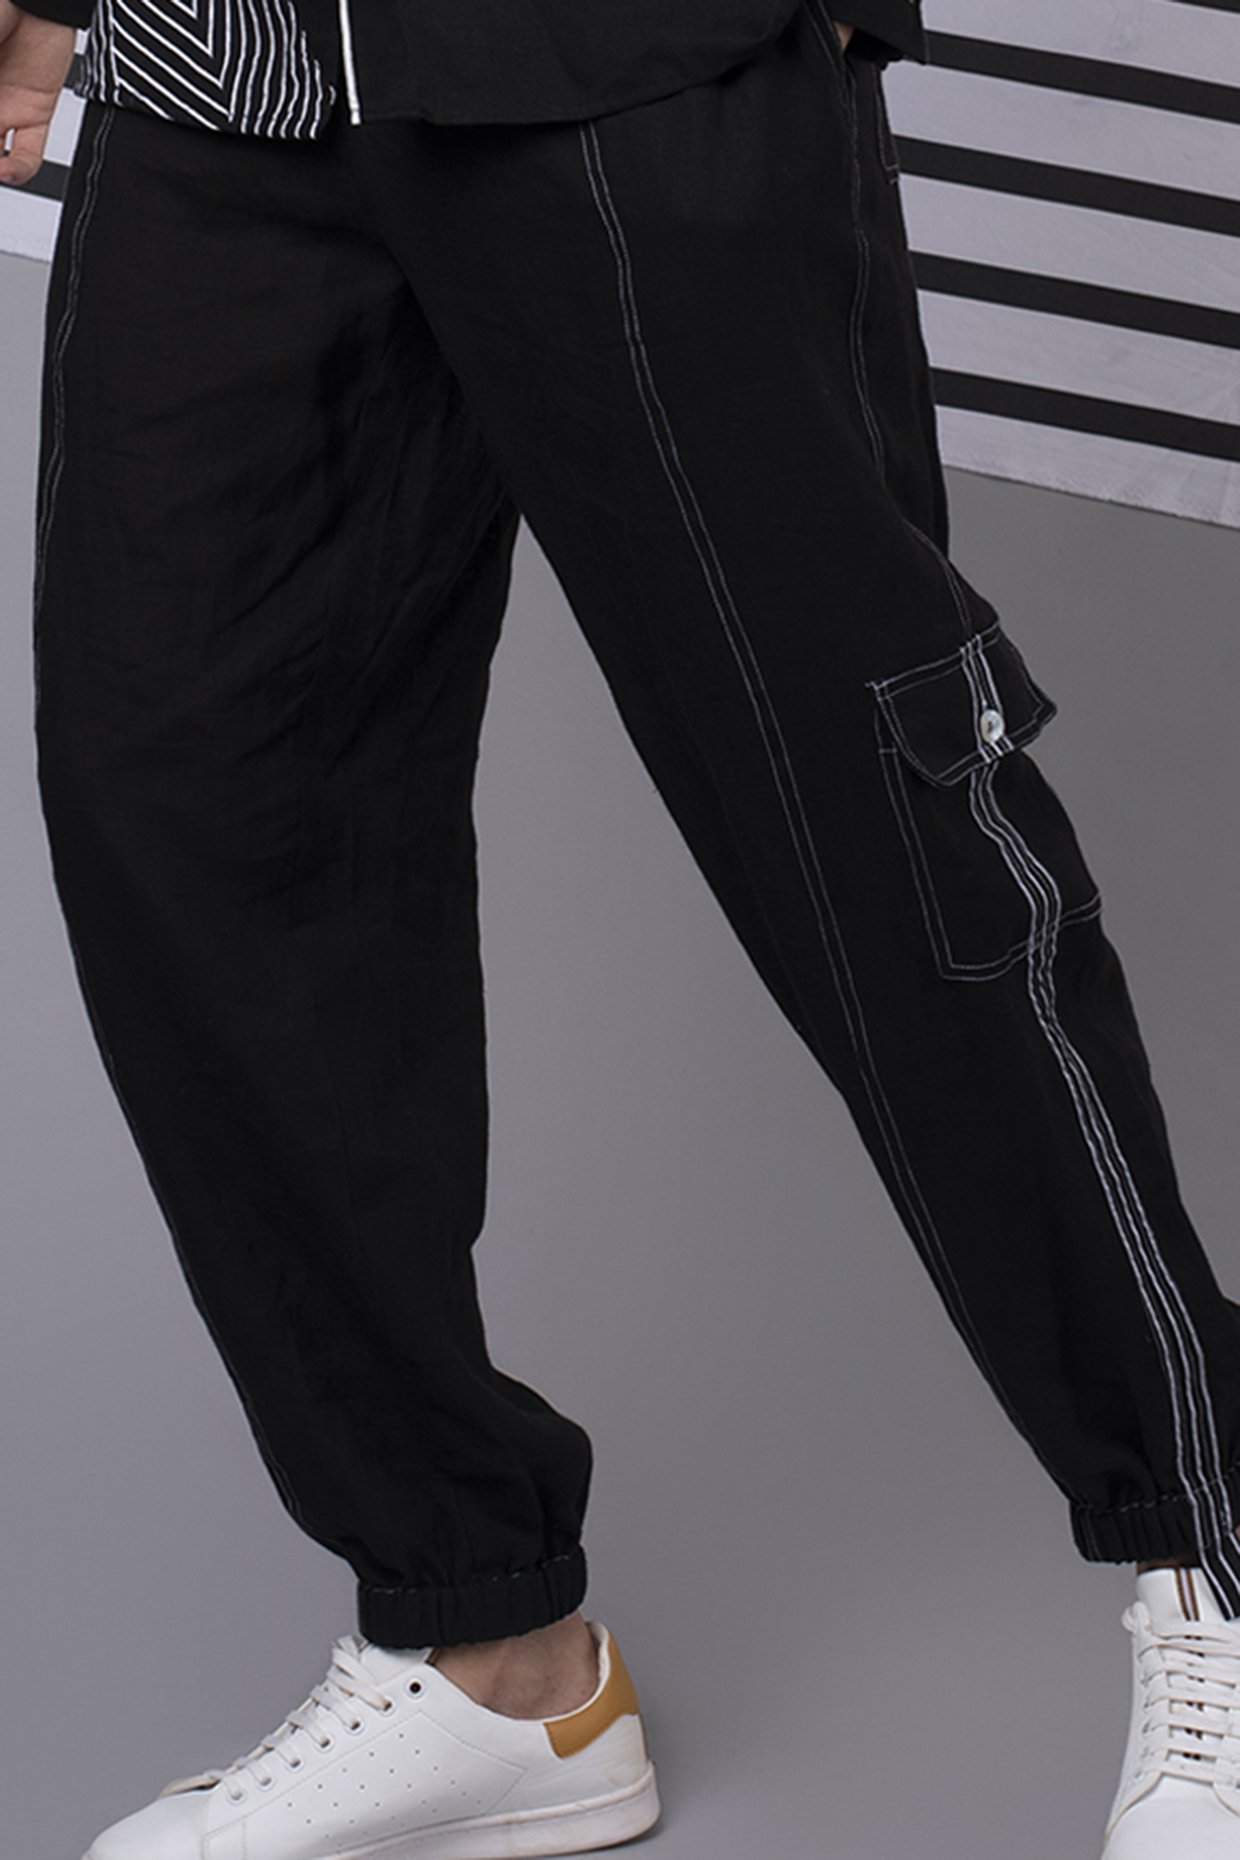 Cotton fleece jogging pants, for men|Quality brand Europann